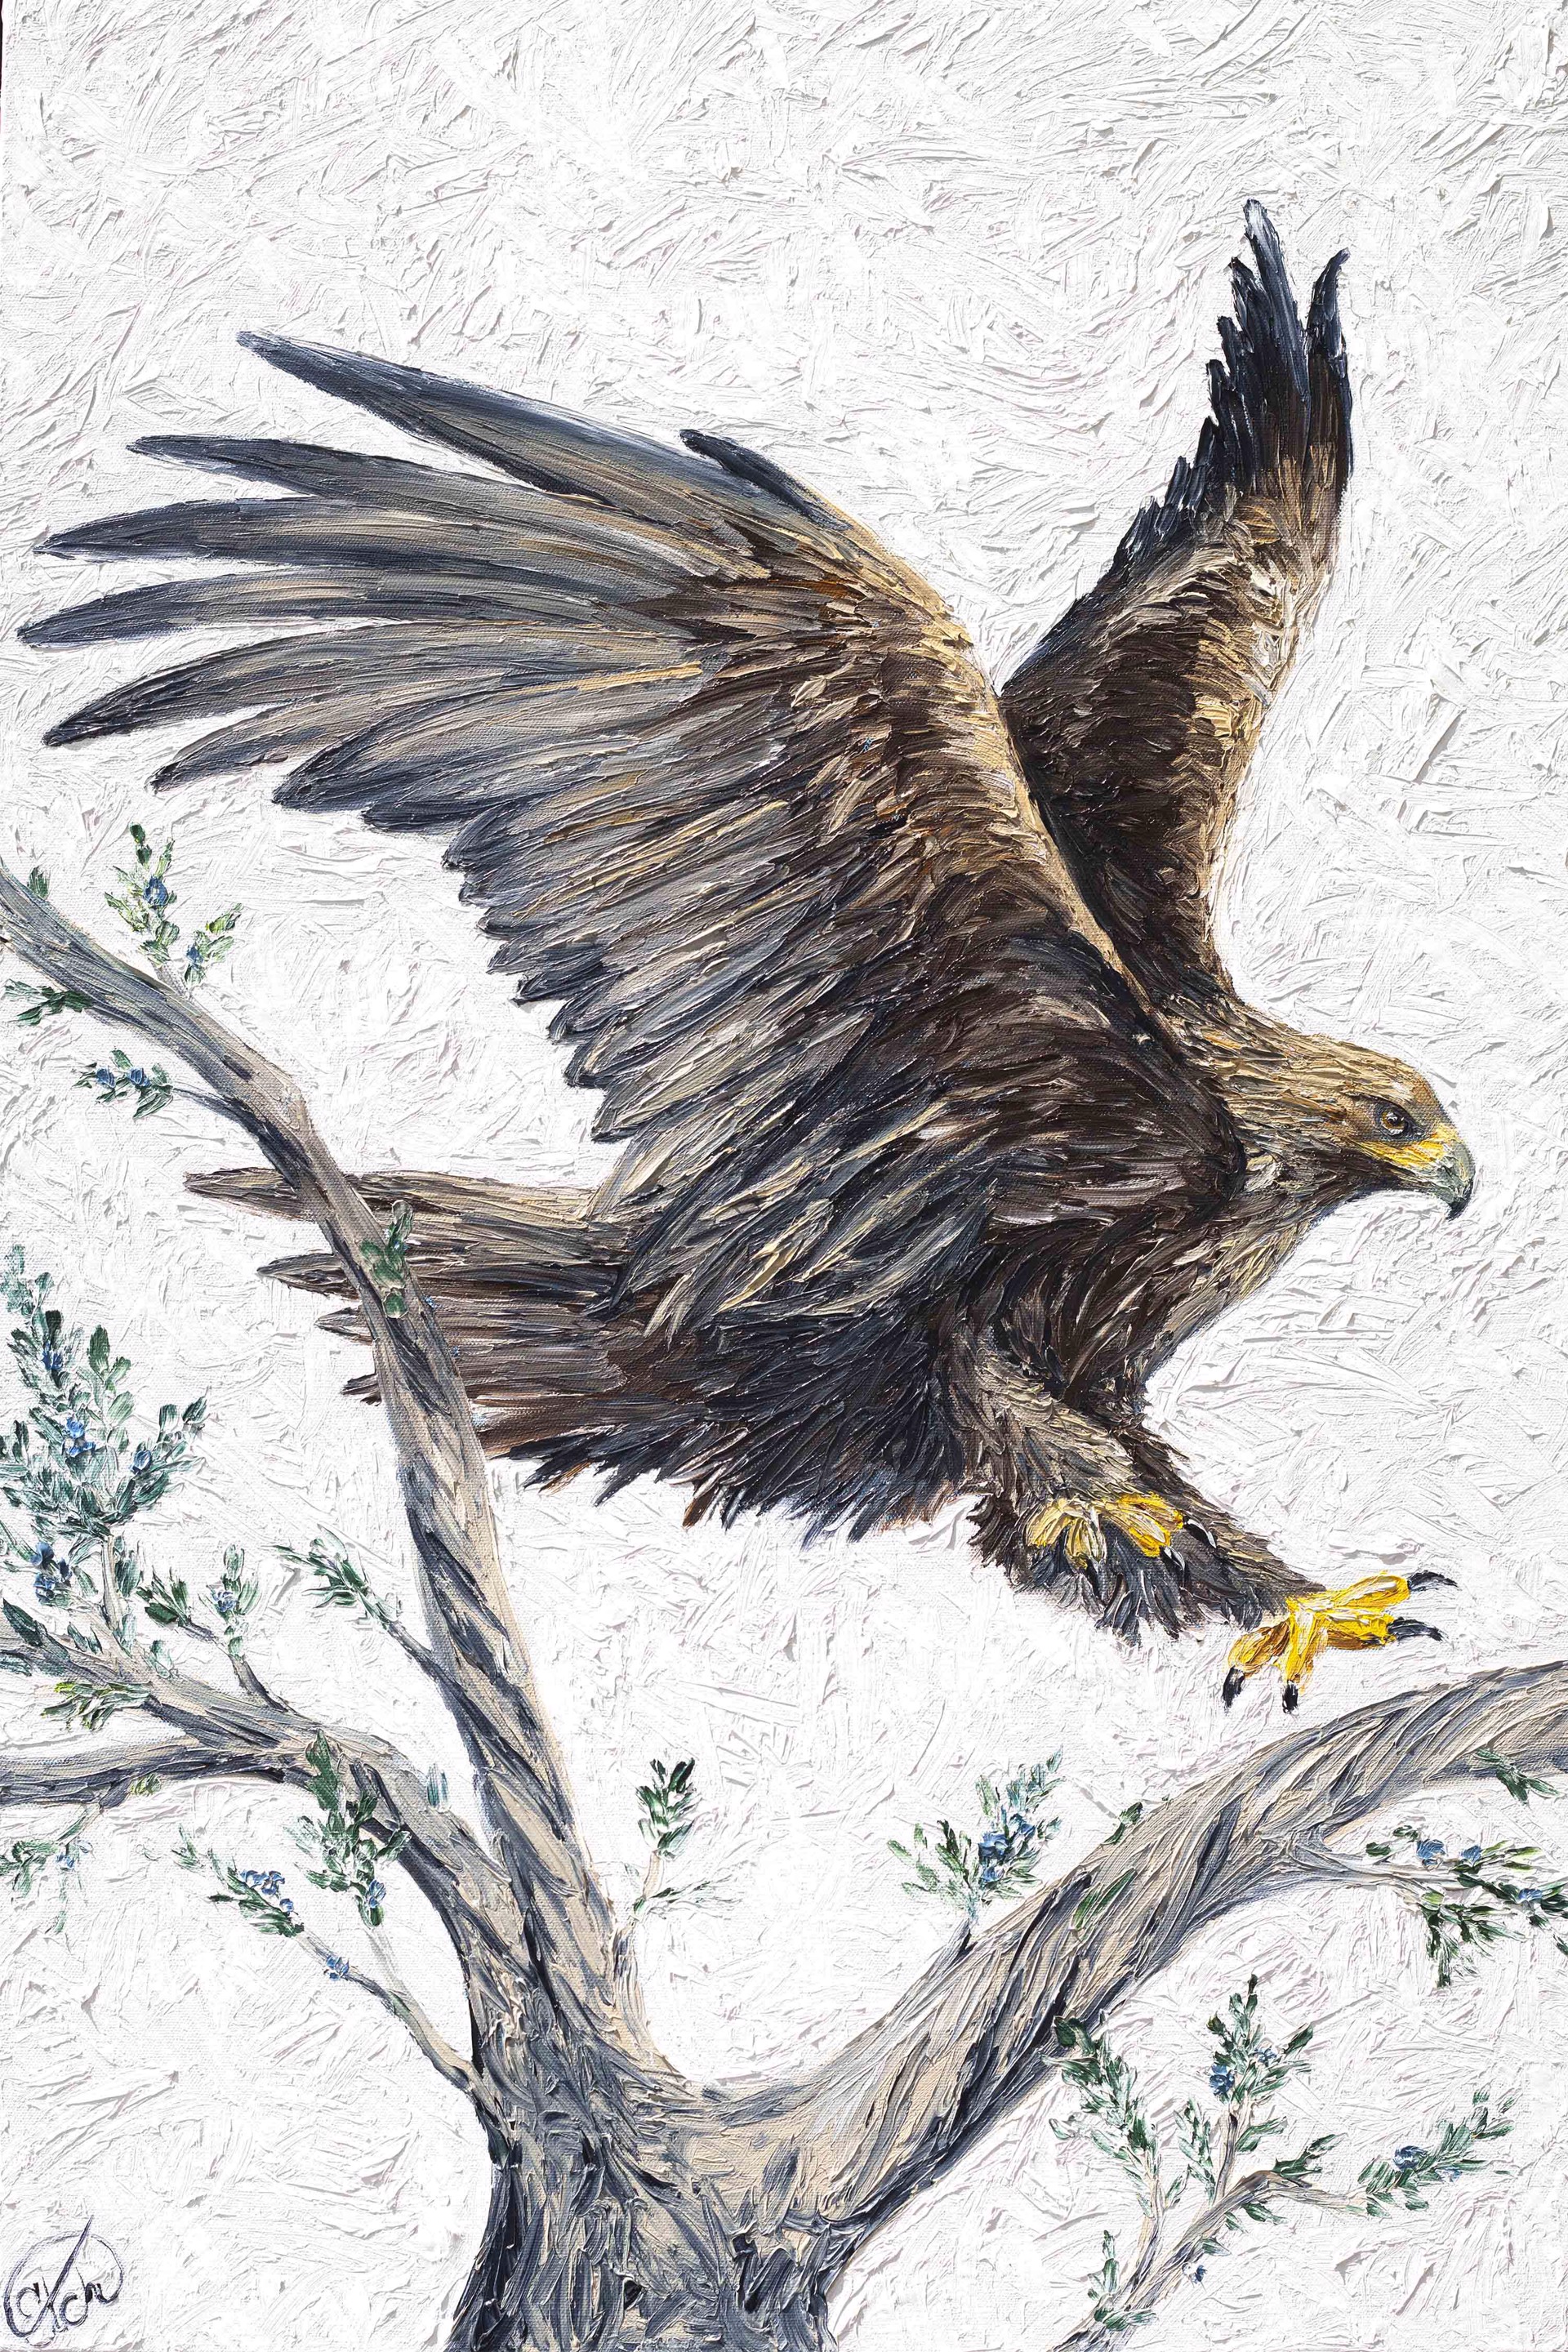 The Golden Eagle: A Witness to Change by Elizabeth Mordensky